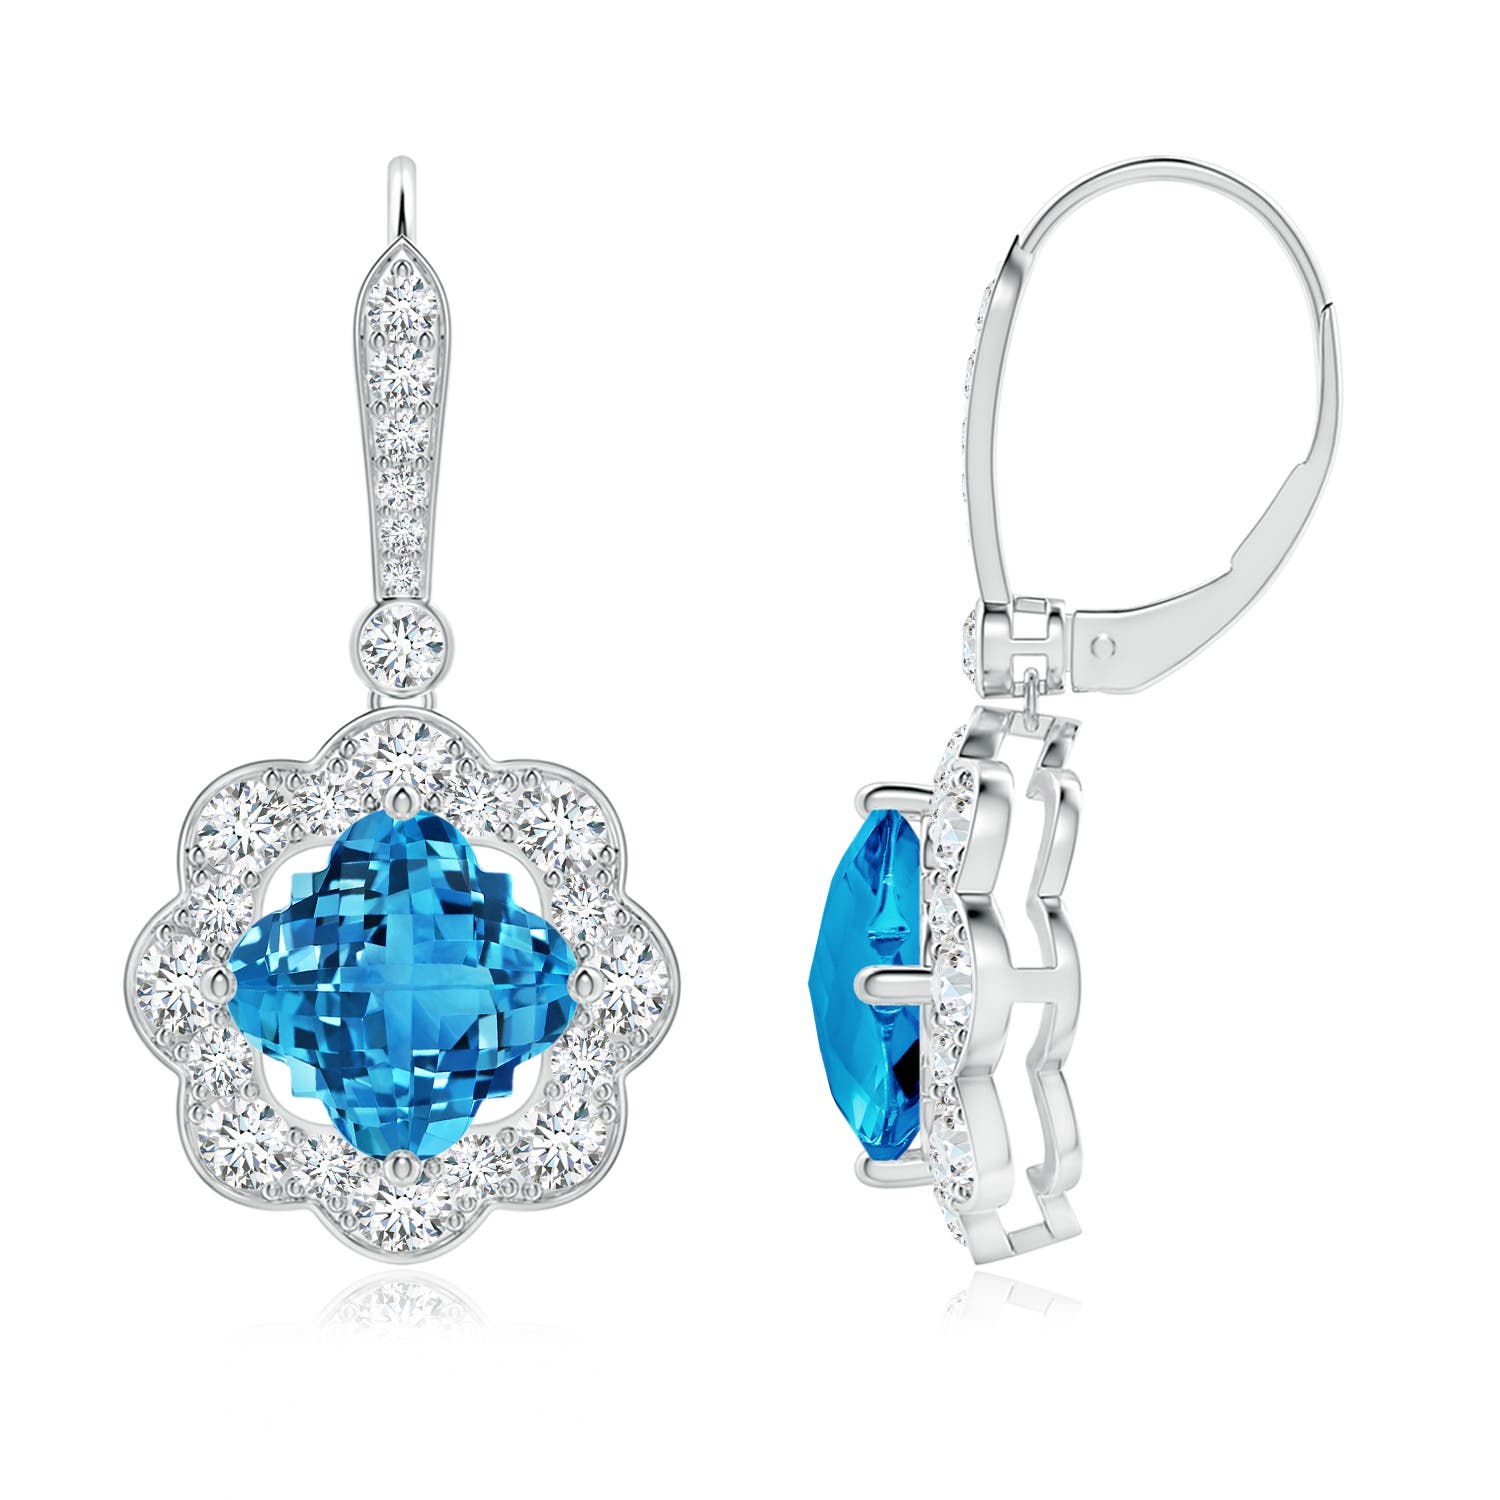 Clover-shaped swiss blue topaz scalloped halo drop angara jewelry earrings